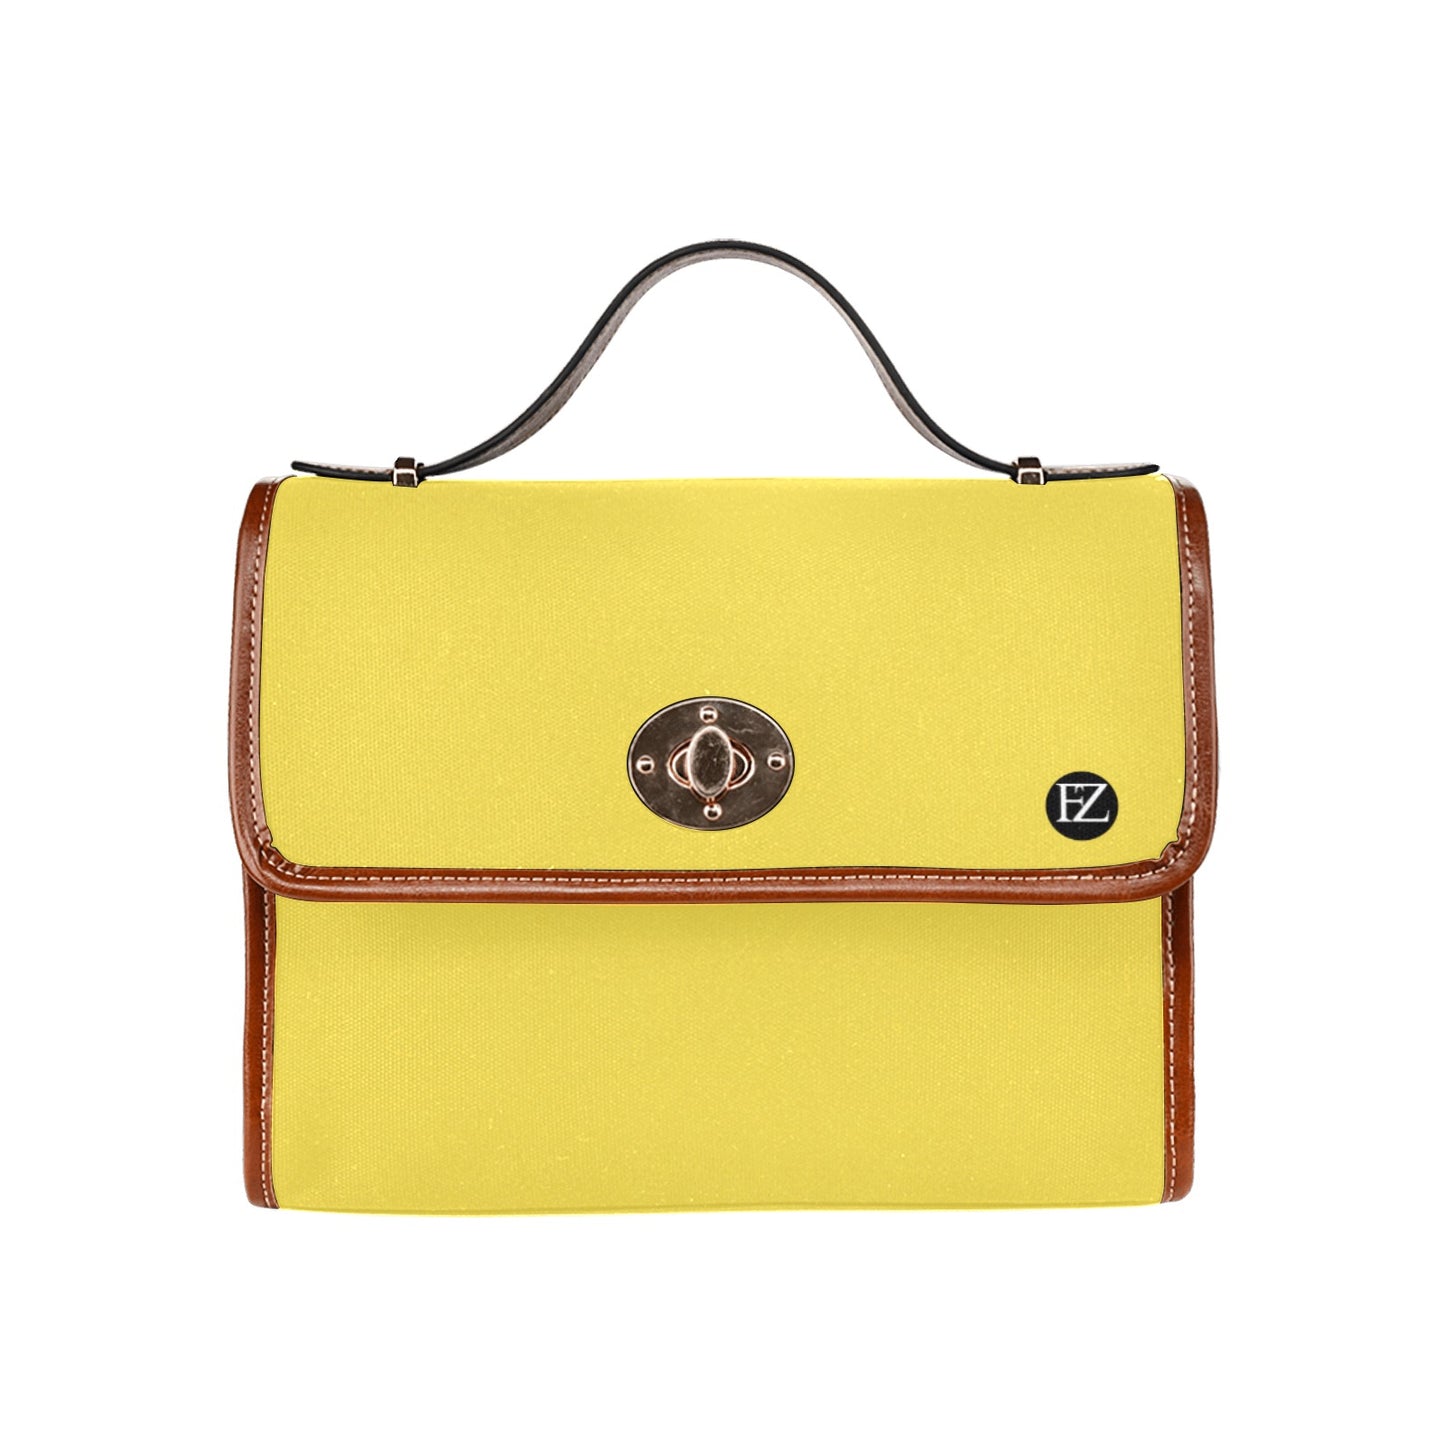 fz original handbag one size / fz 0riginal handbag - yellow all over print waterproof canvas bag(model1641)(brown strap)